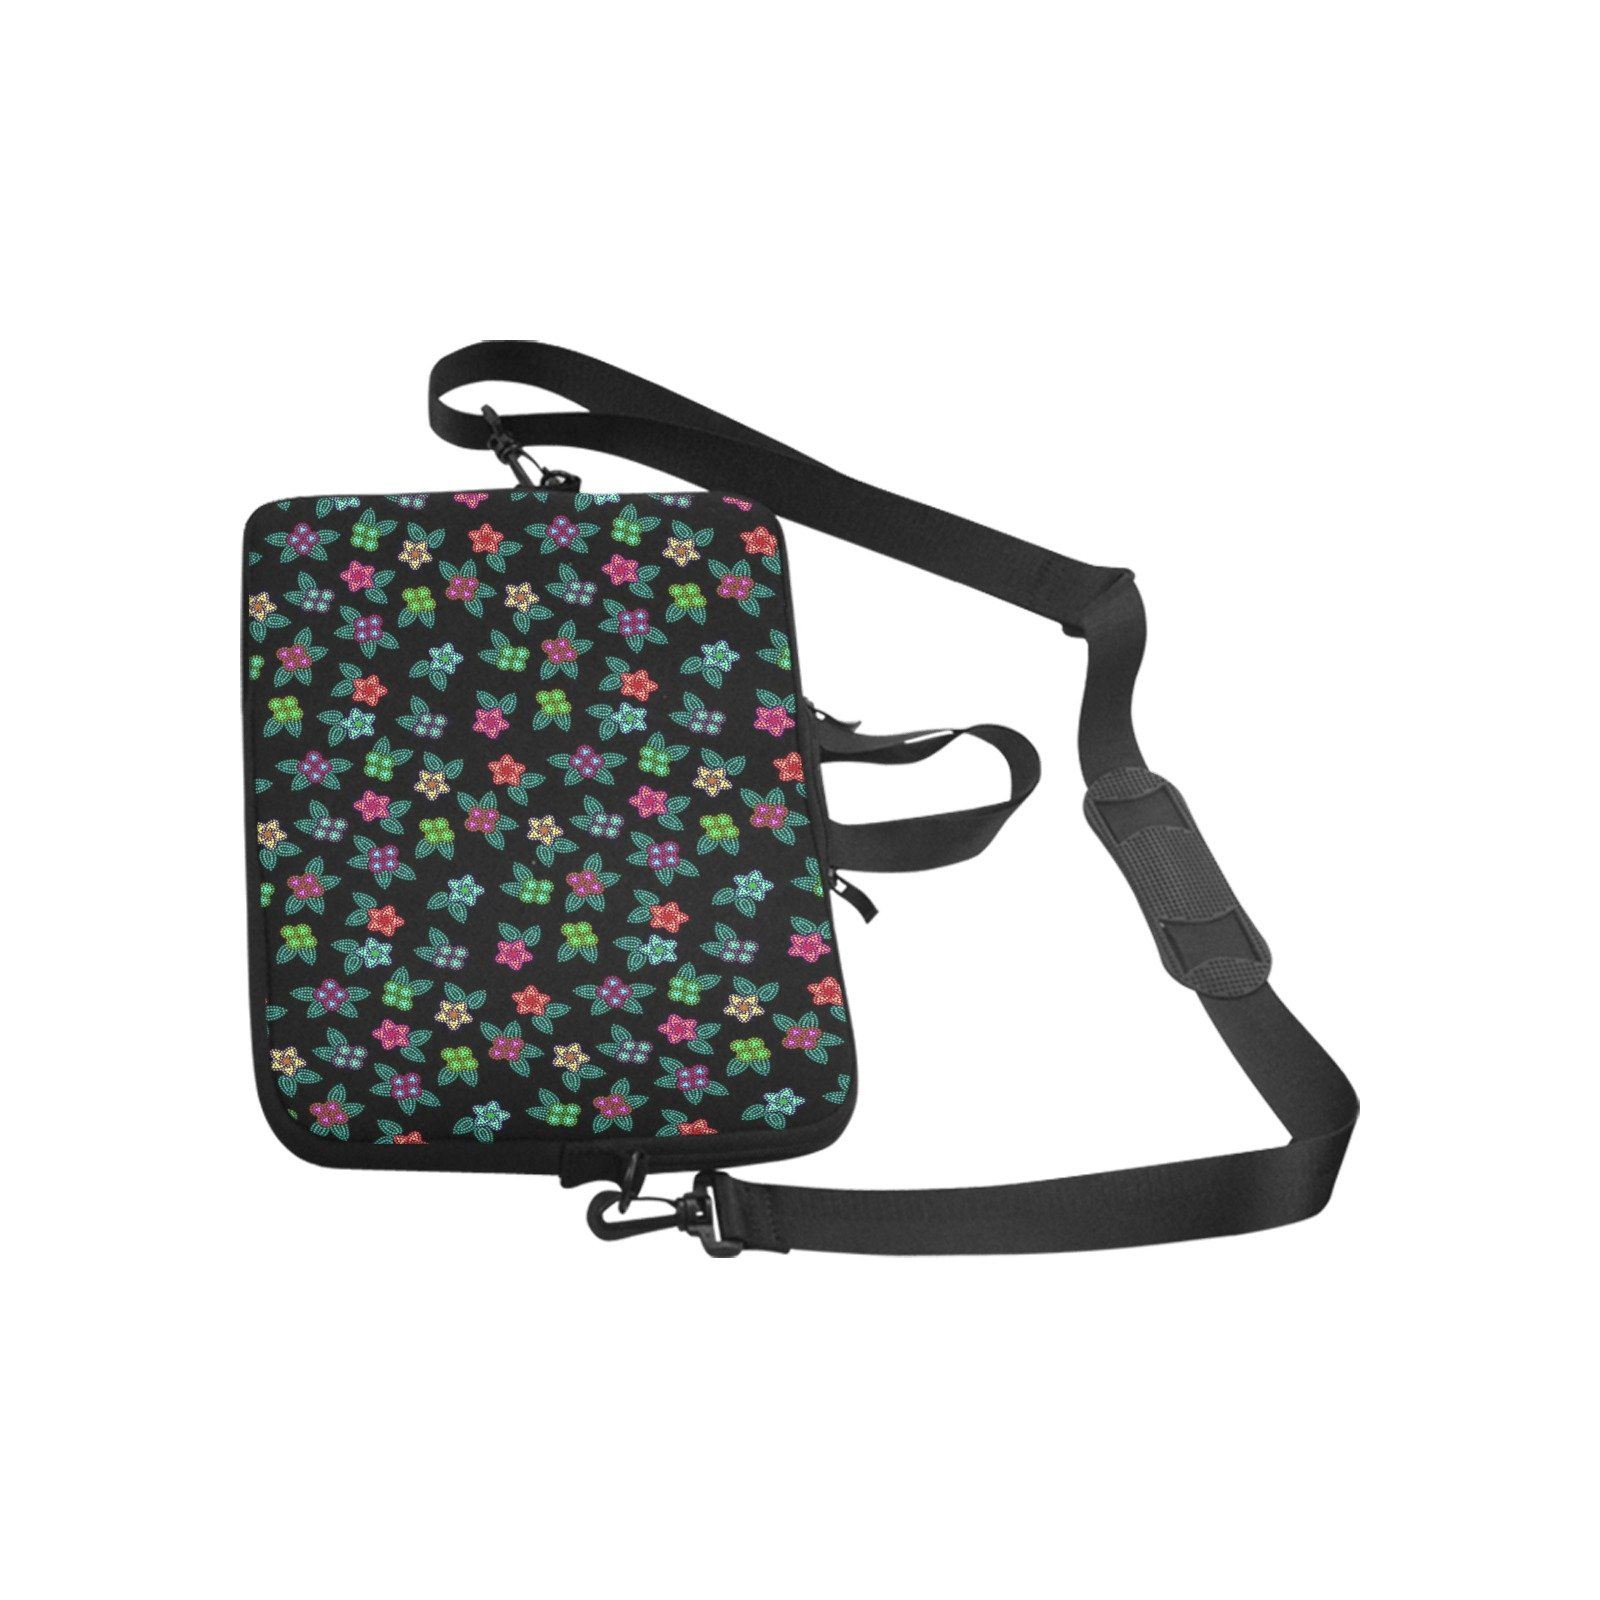 Berry Flowers Black Laptop Handbags 14" bag e-joyer 